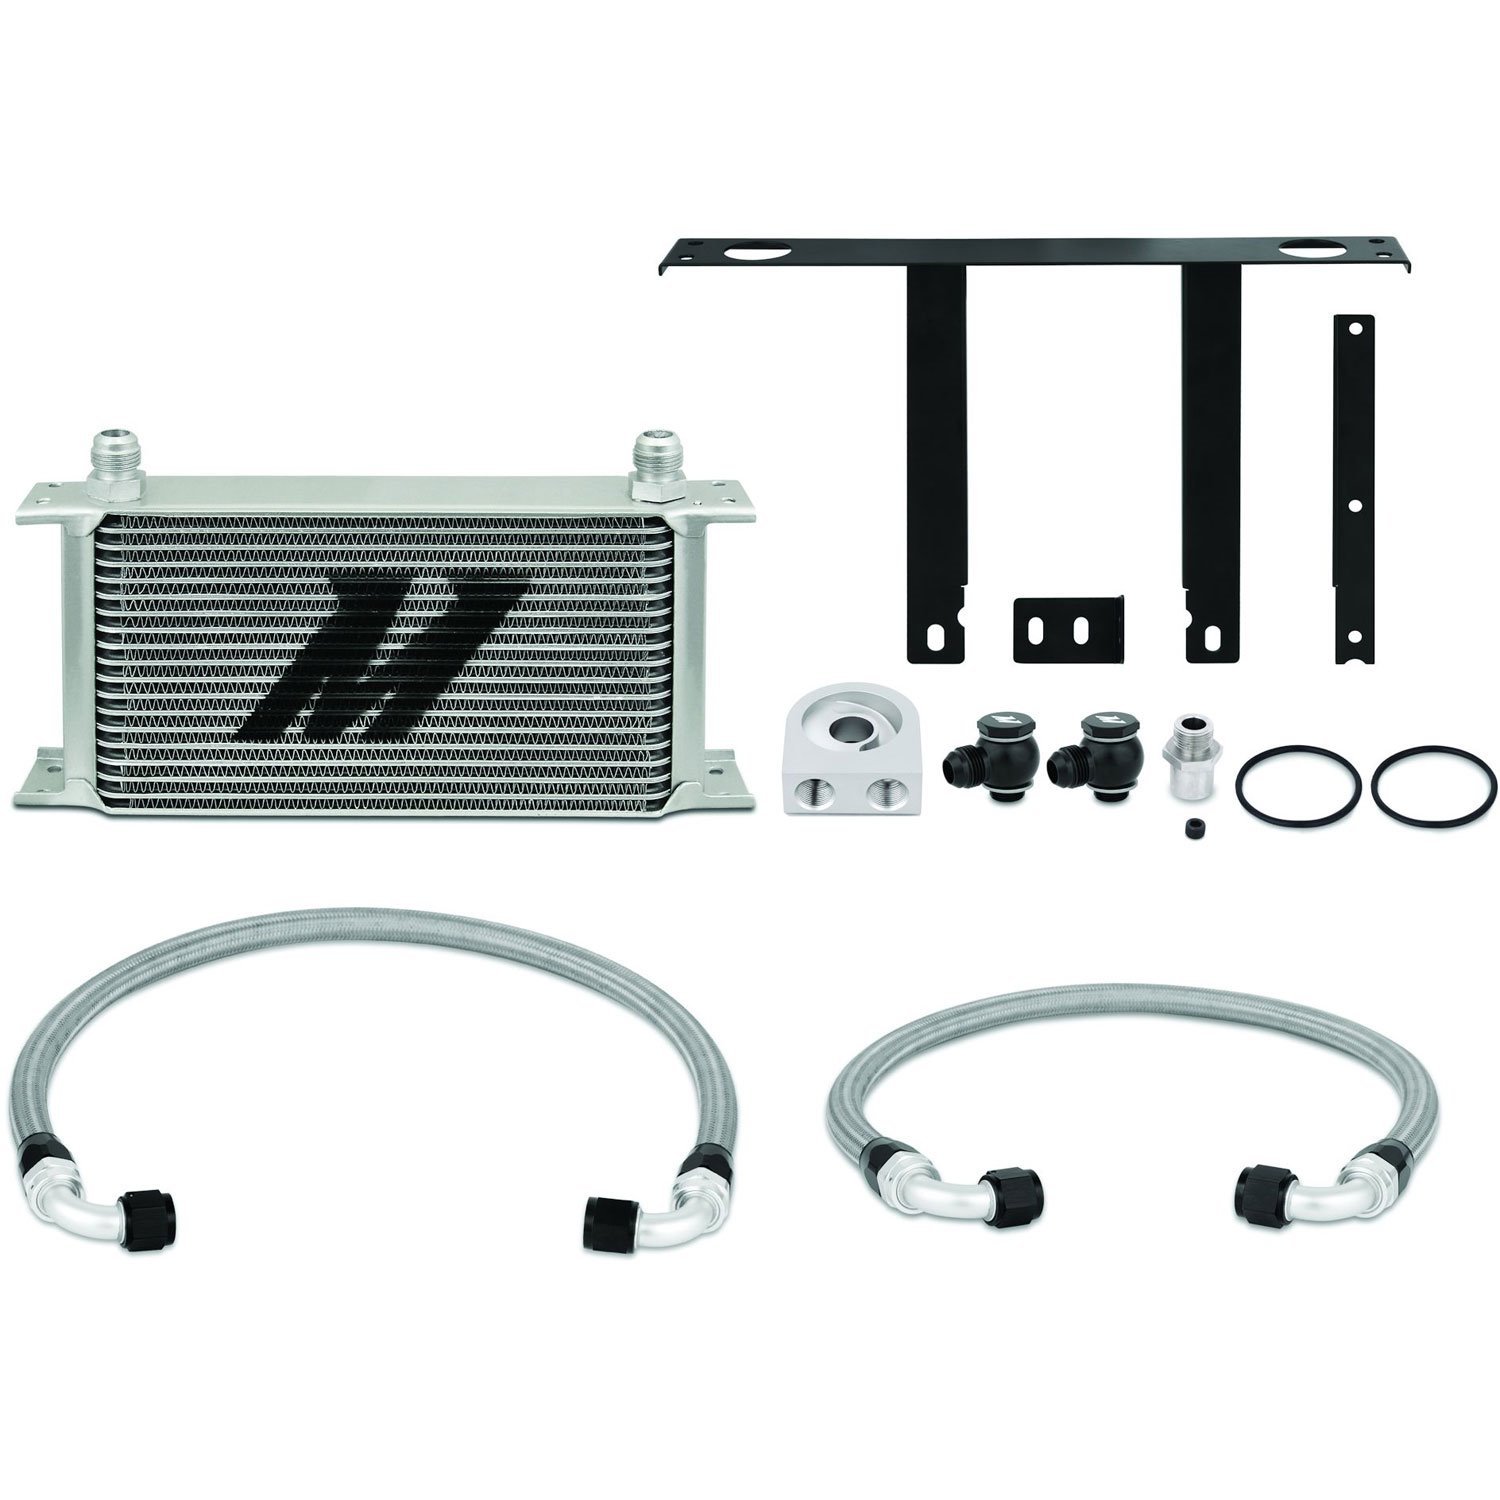 Hyundai Genesis Coupe 2.0T Oil Cooler Kit - MFG Part No. MMOC-GEN4-10